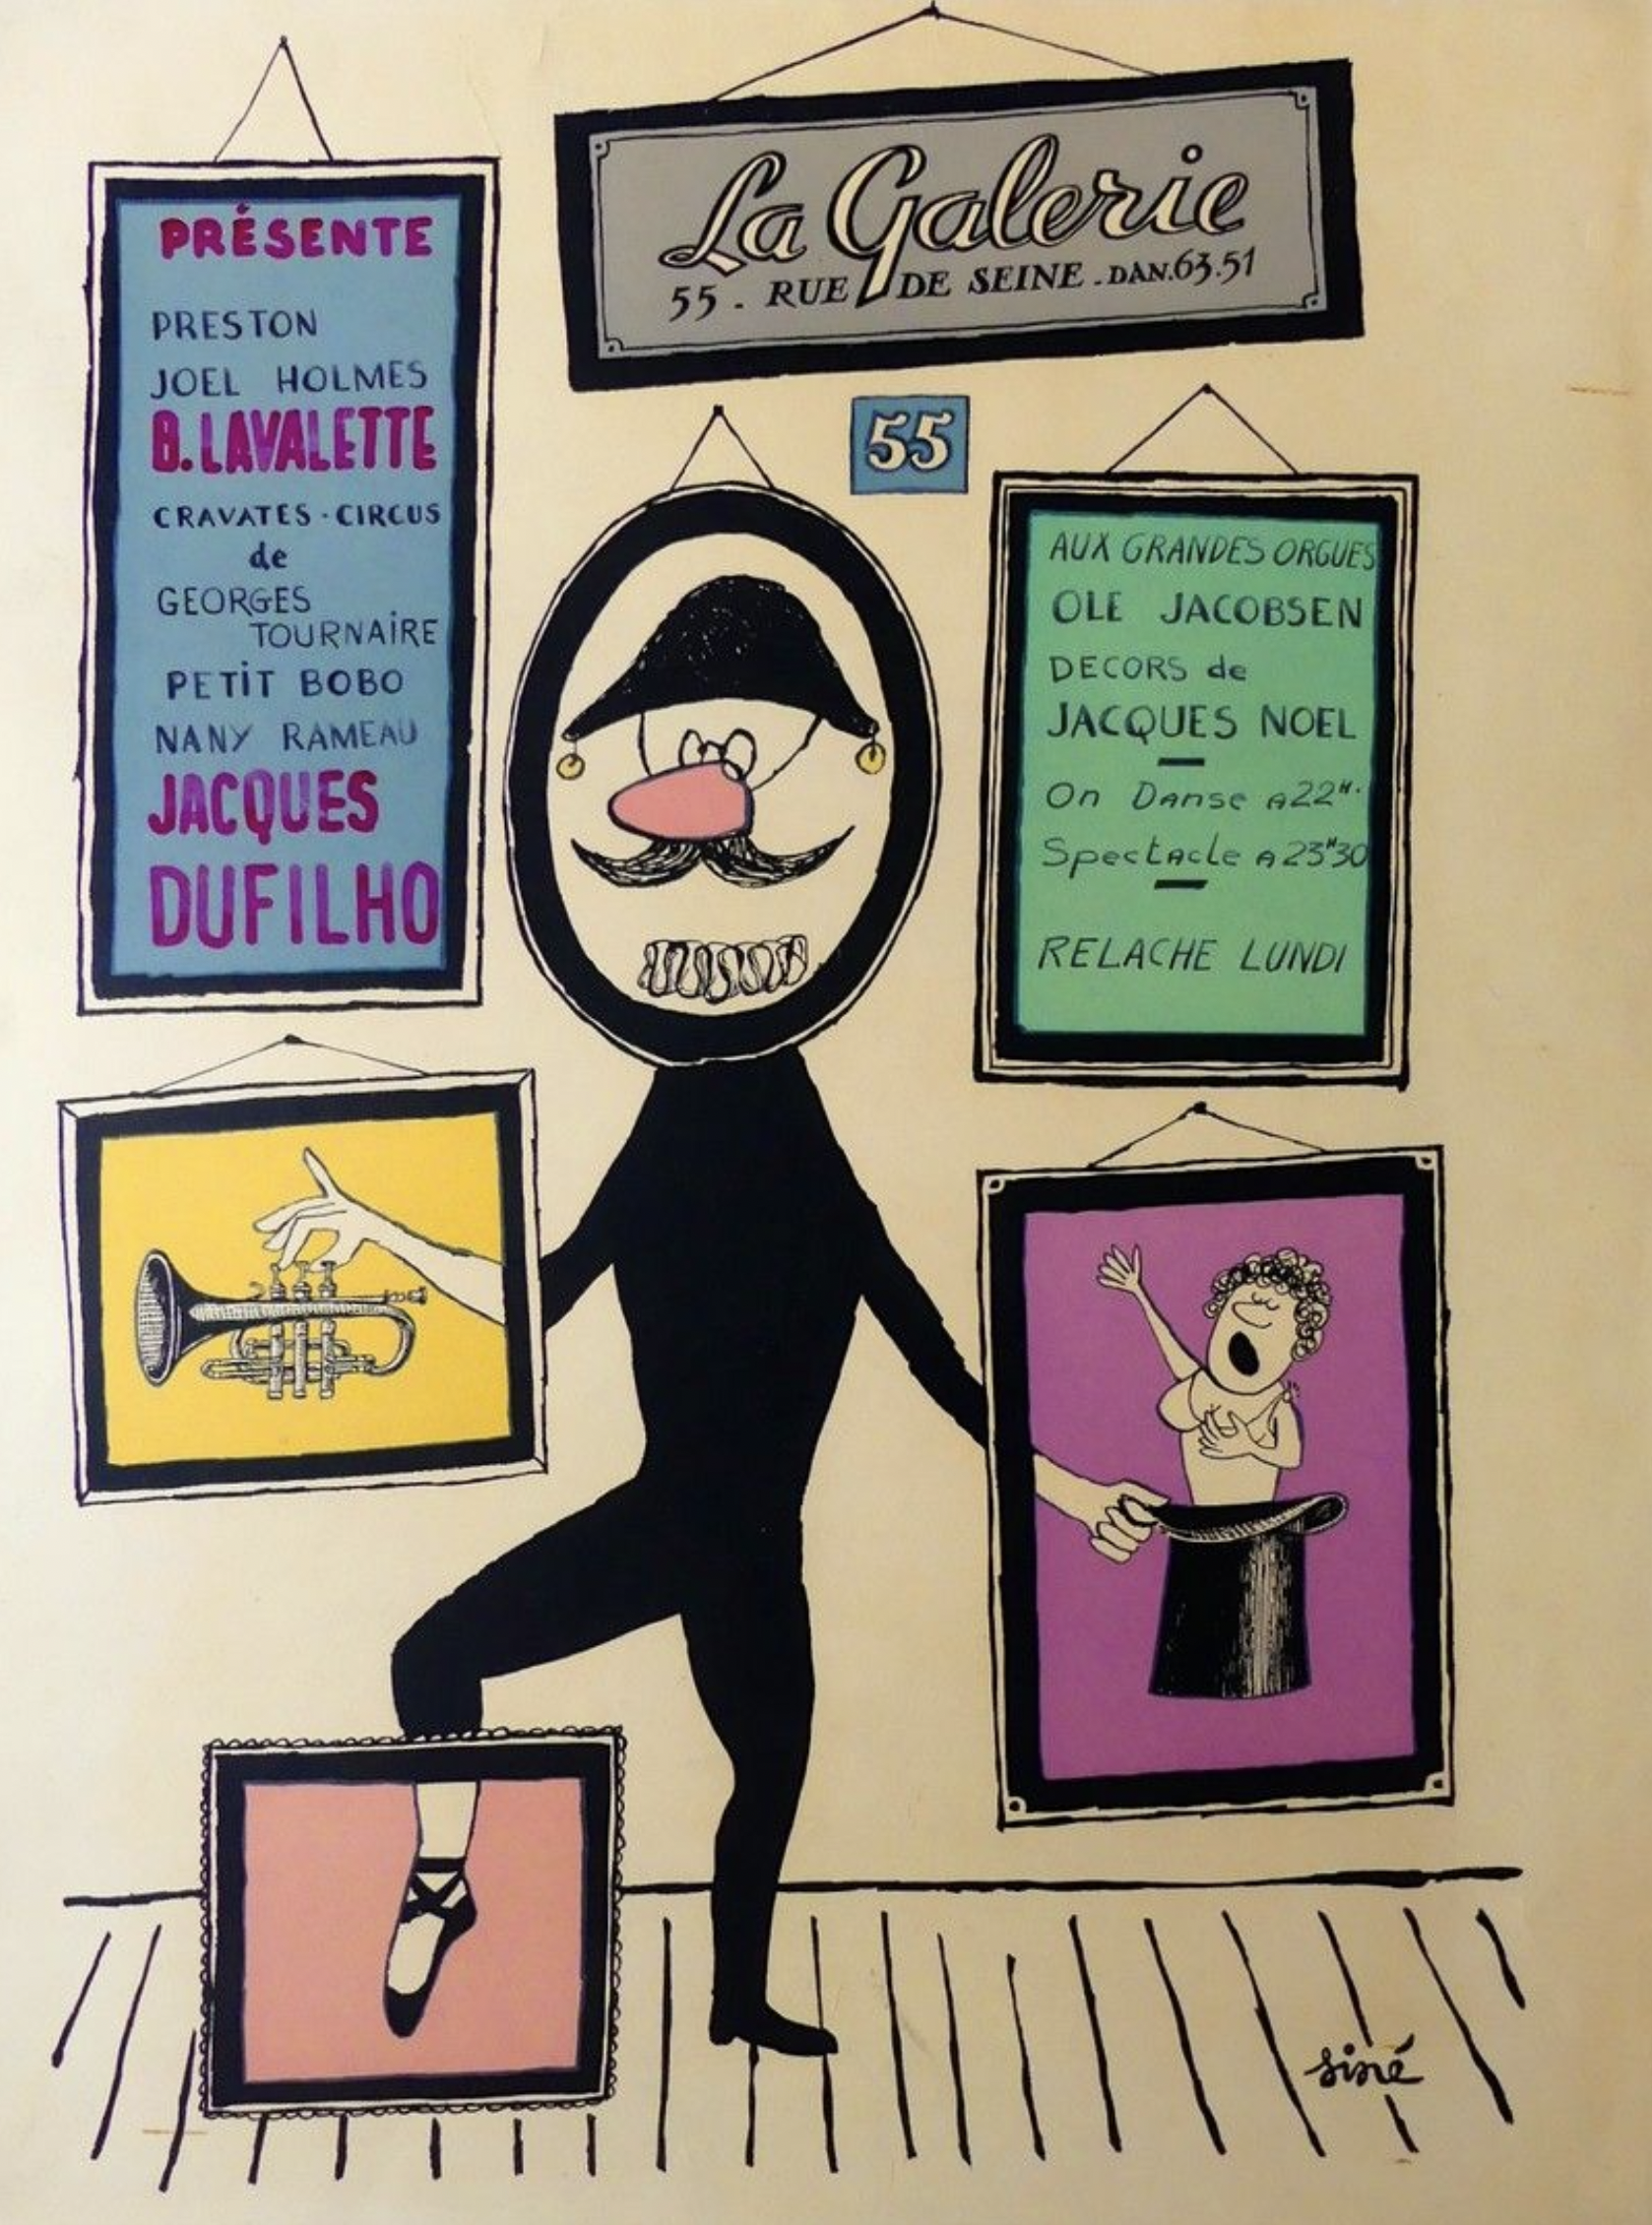 LA GALERIE Original Vintage Poster Letitia Morris Gallery